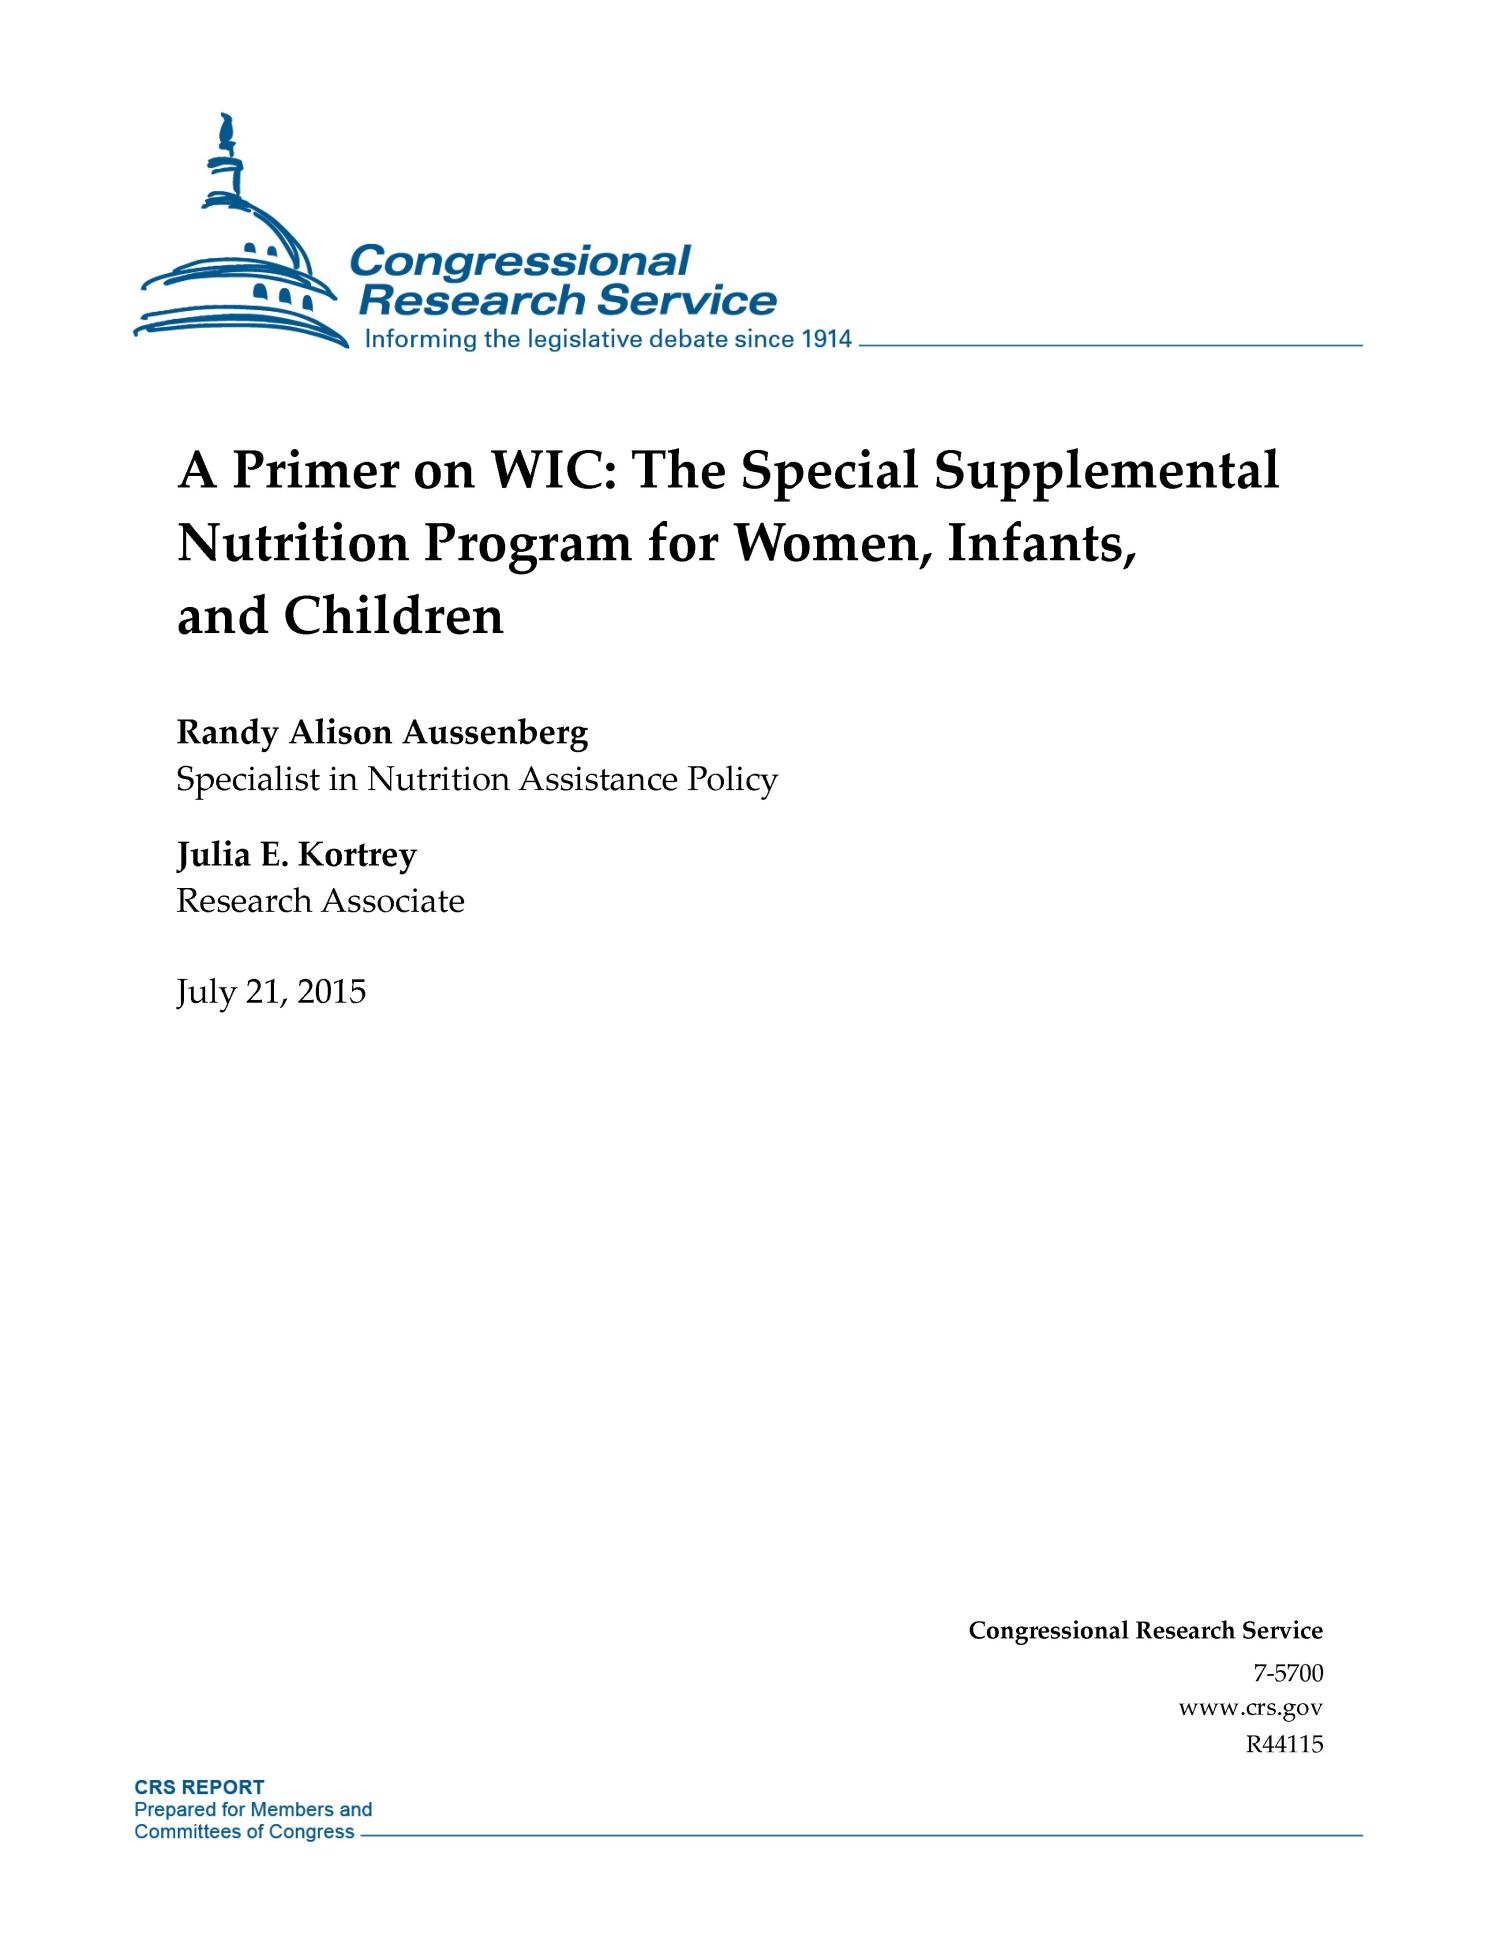 The Supplemental Nutrition Program for Women, Infants and Children (WIC)